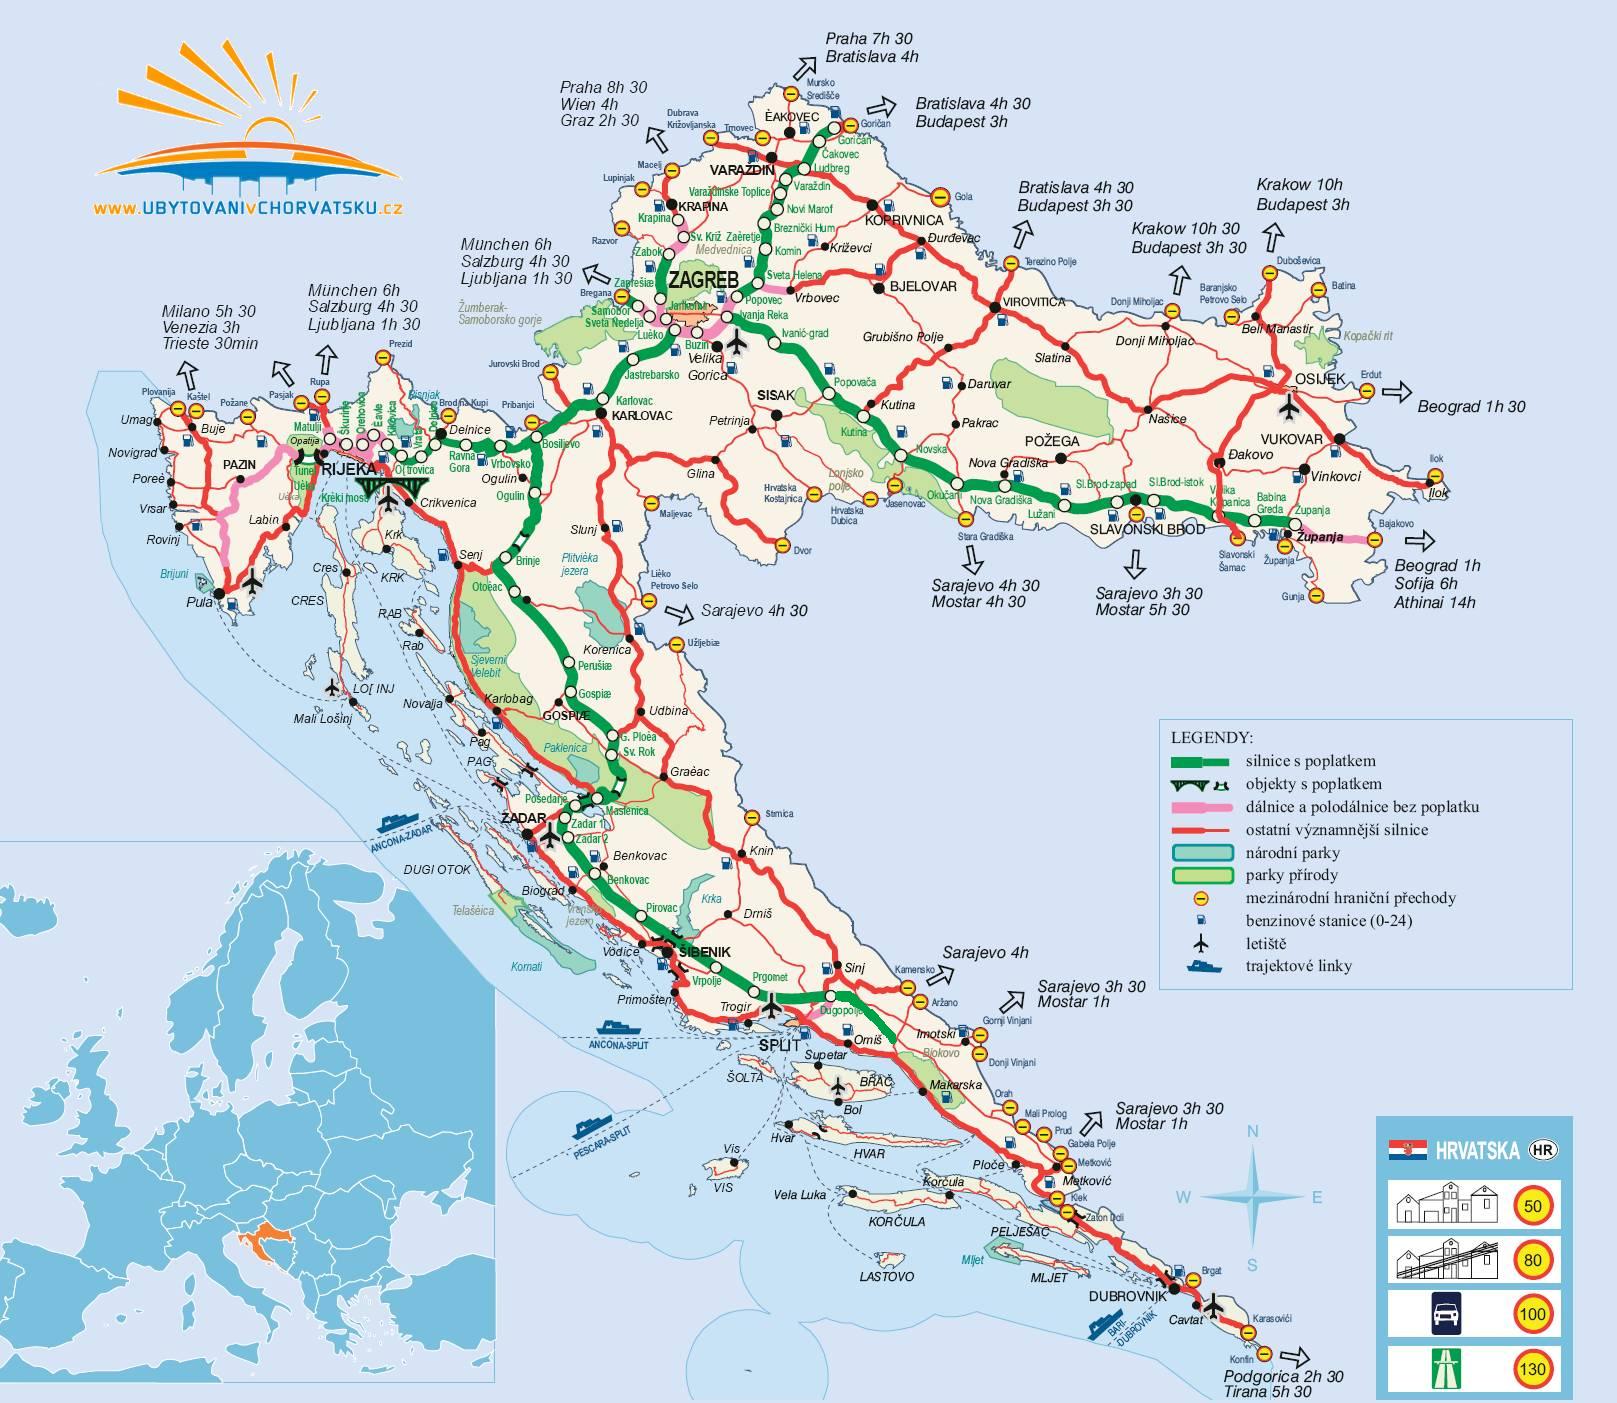 http://www.croatia-hrvatska.eu/grafika/mapa.jpg